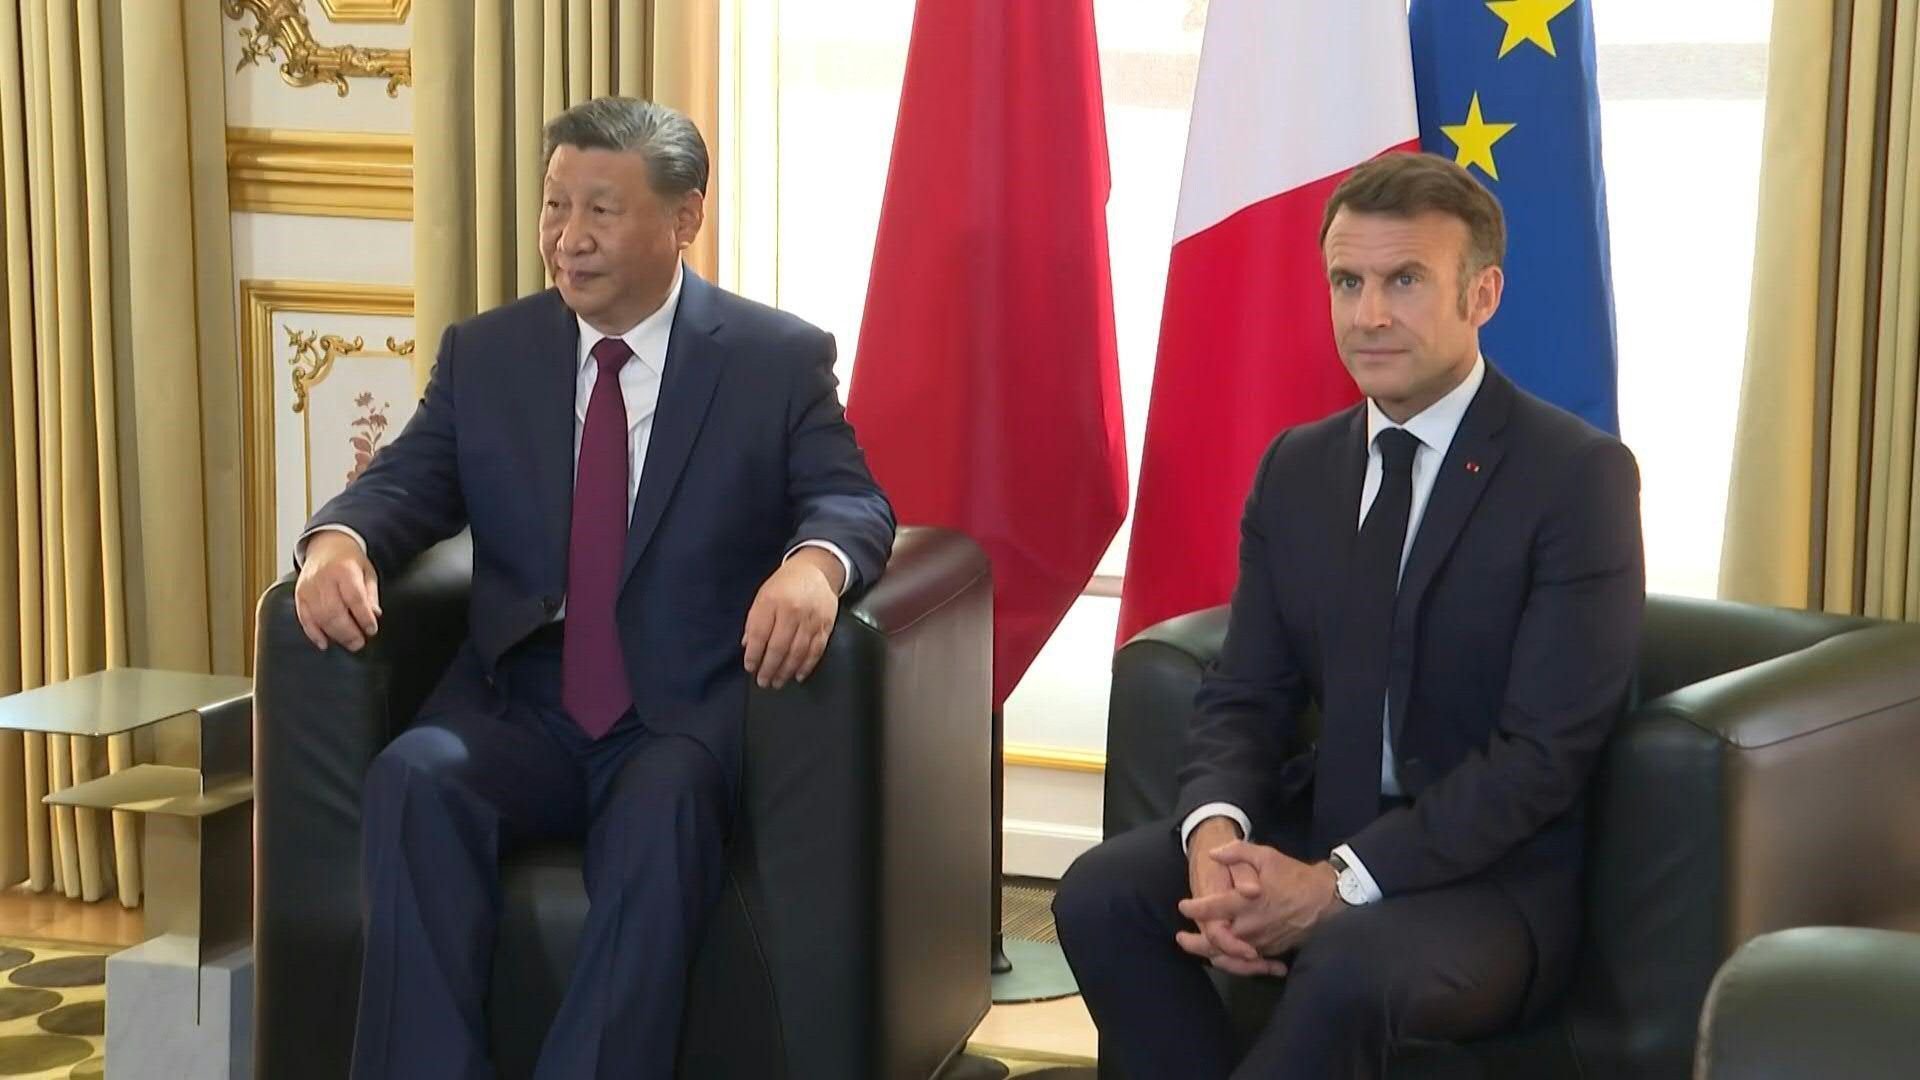 President Macron and Xi Jinping hold talks at the Elysee Palace